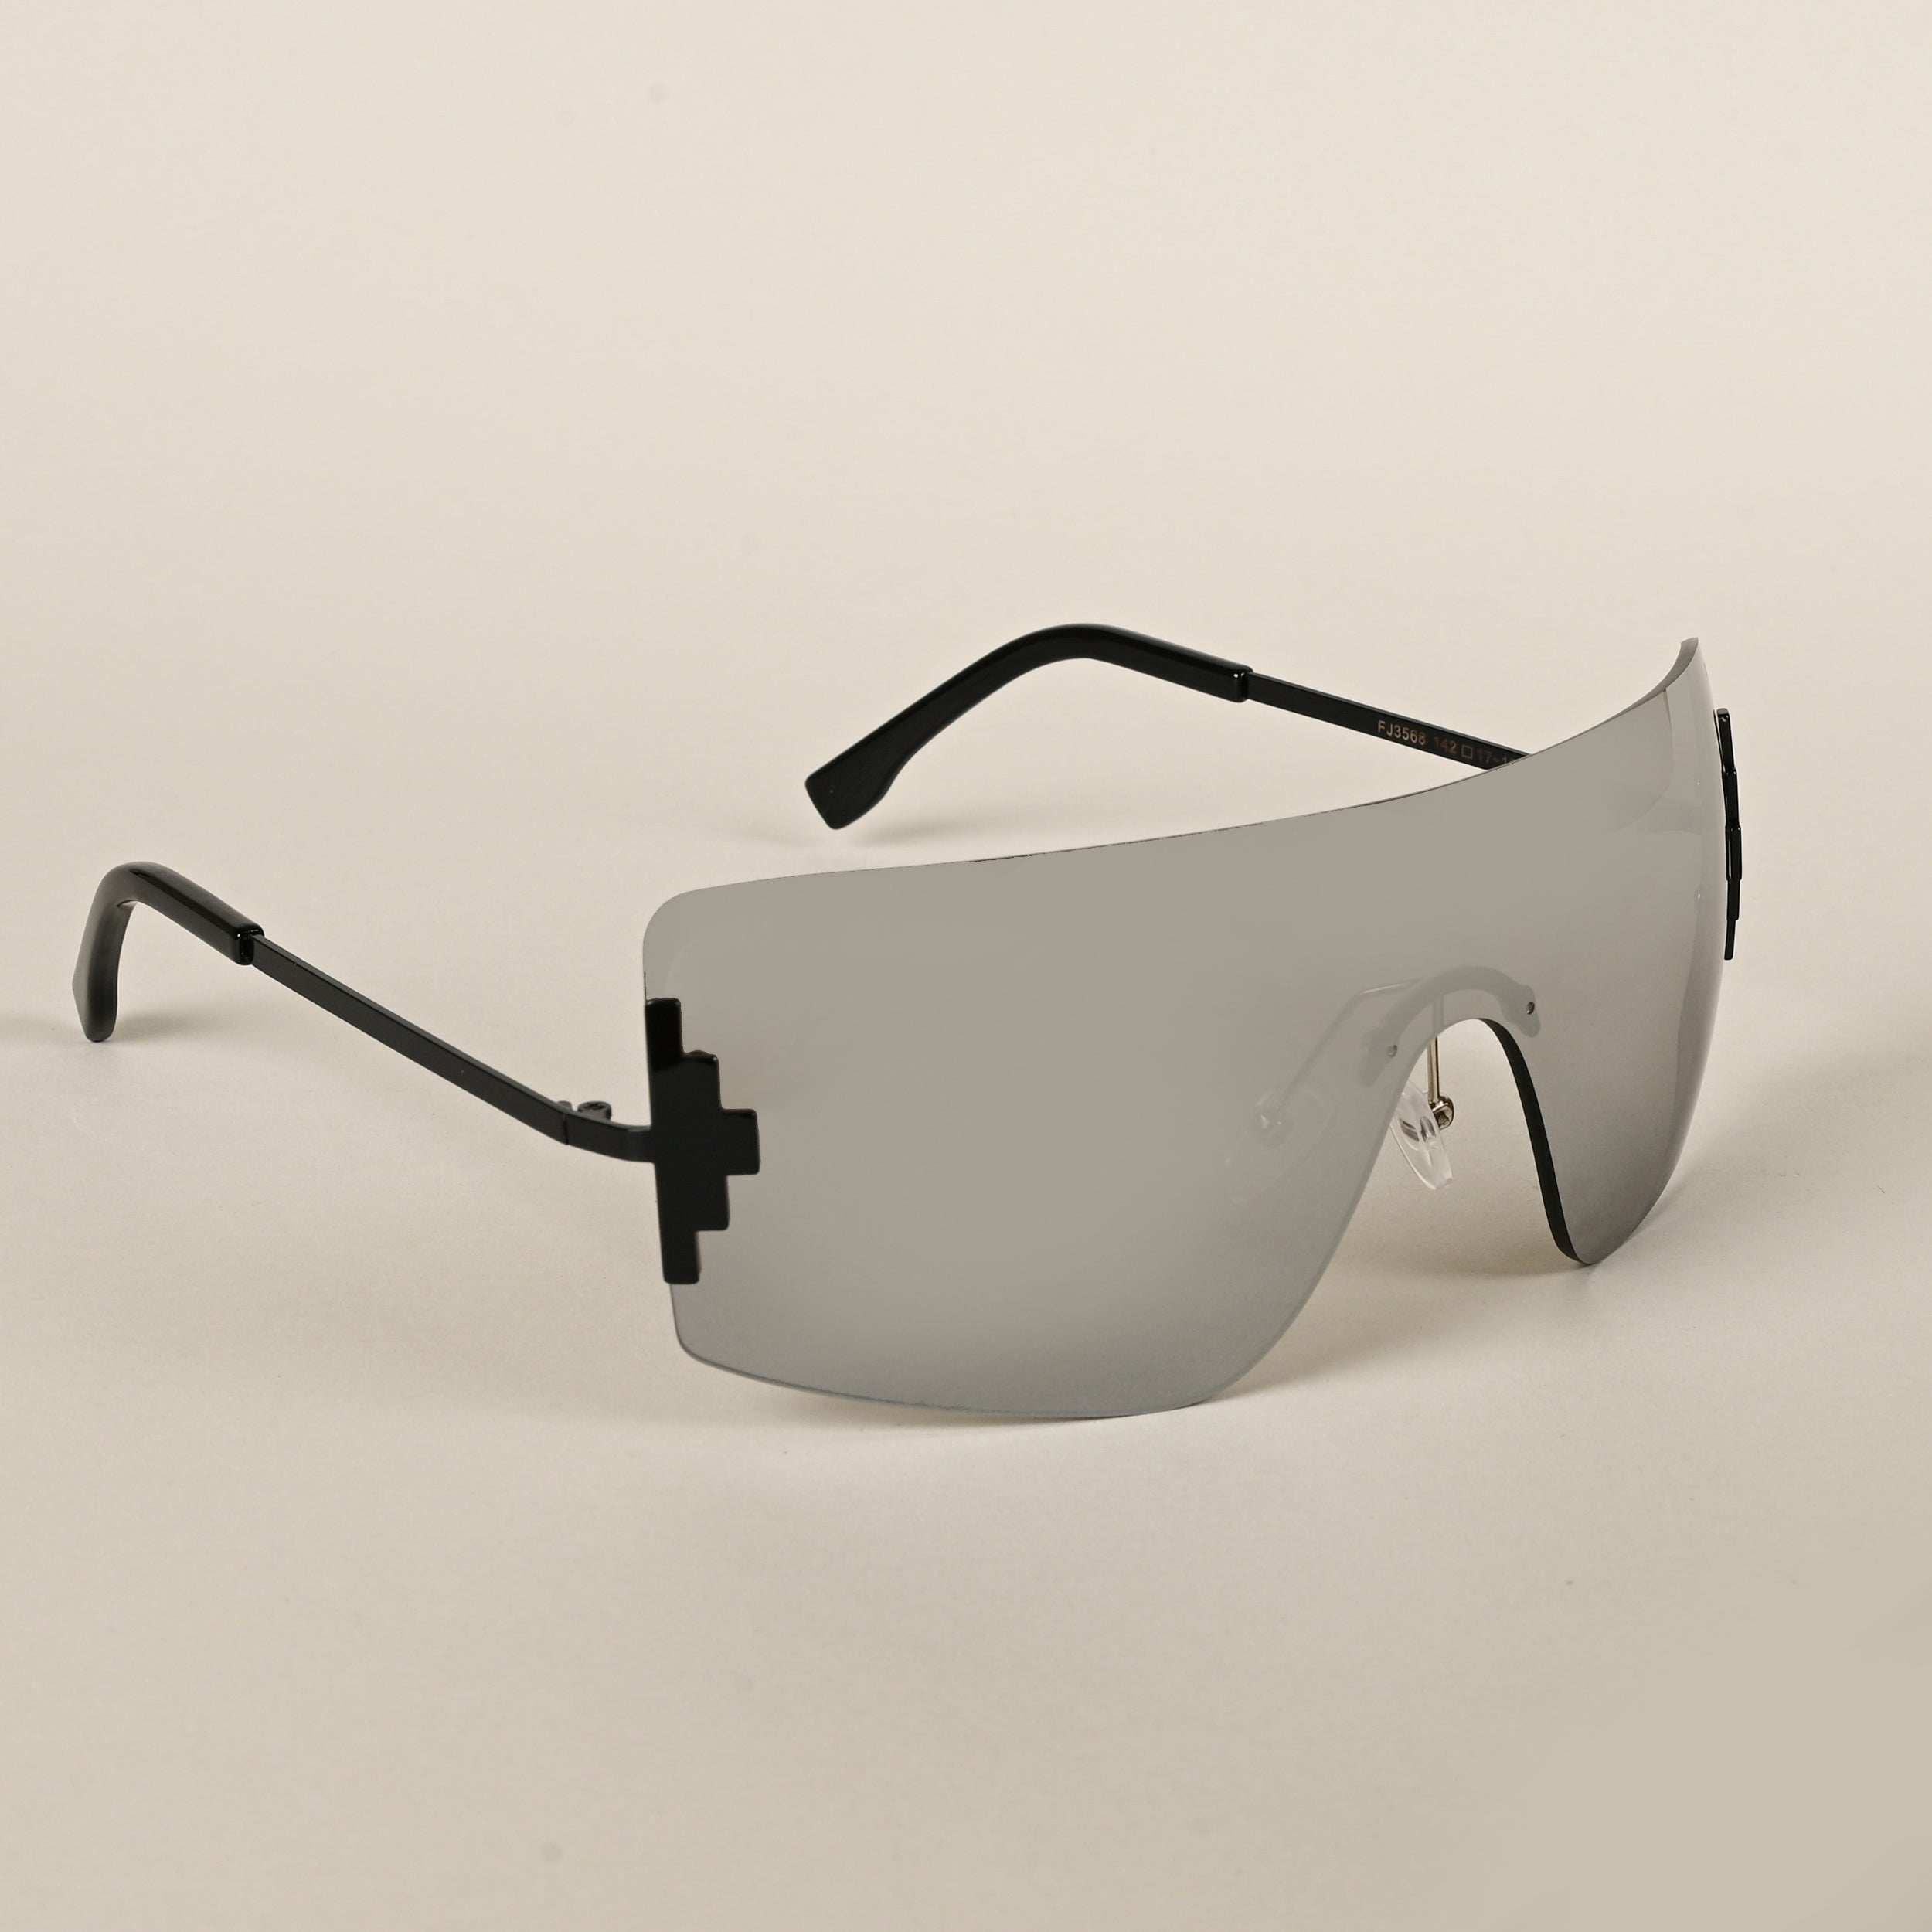 Voyage Silver Wrap Around Sunglasses for Men & Women - MG4119